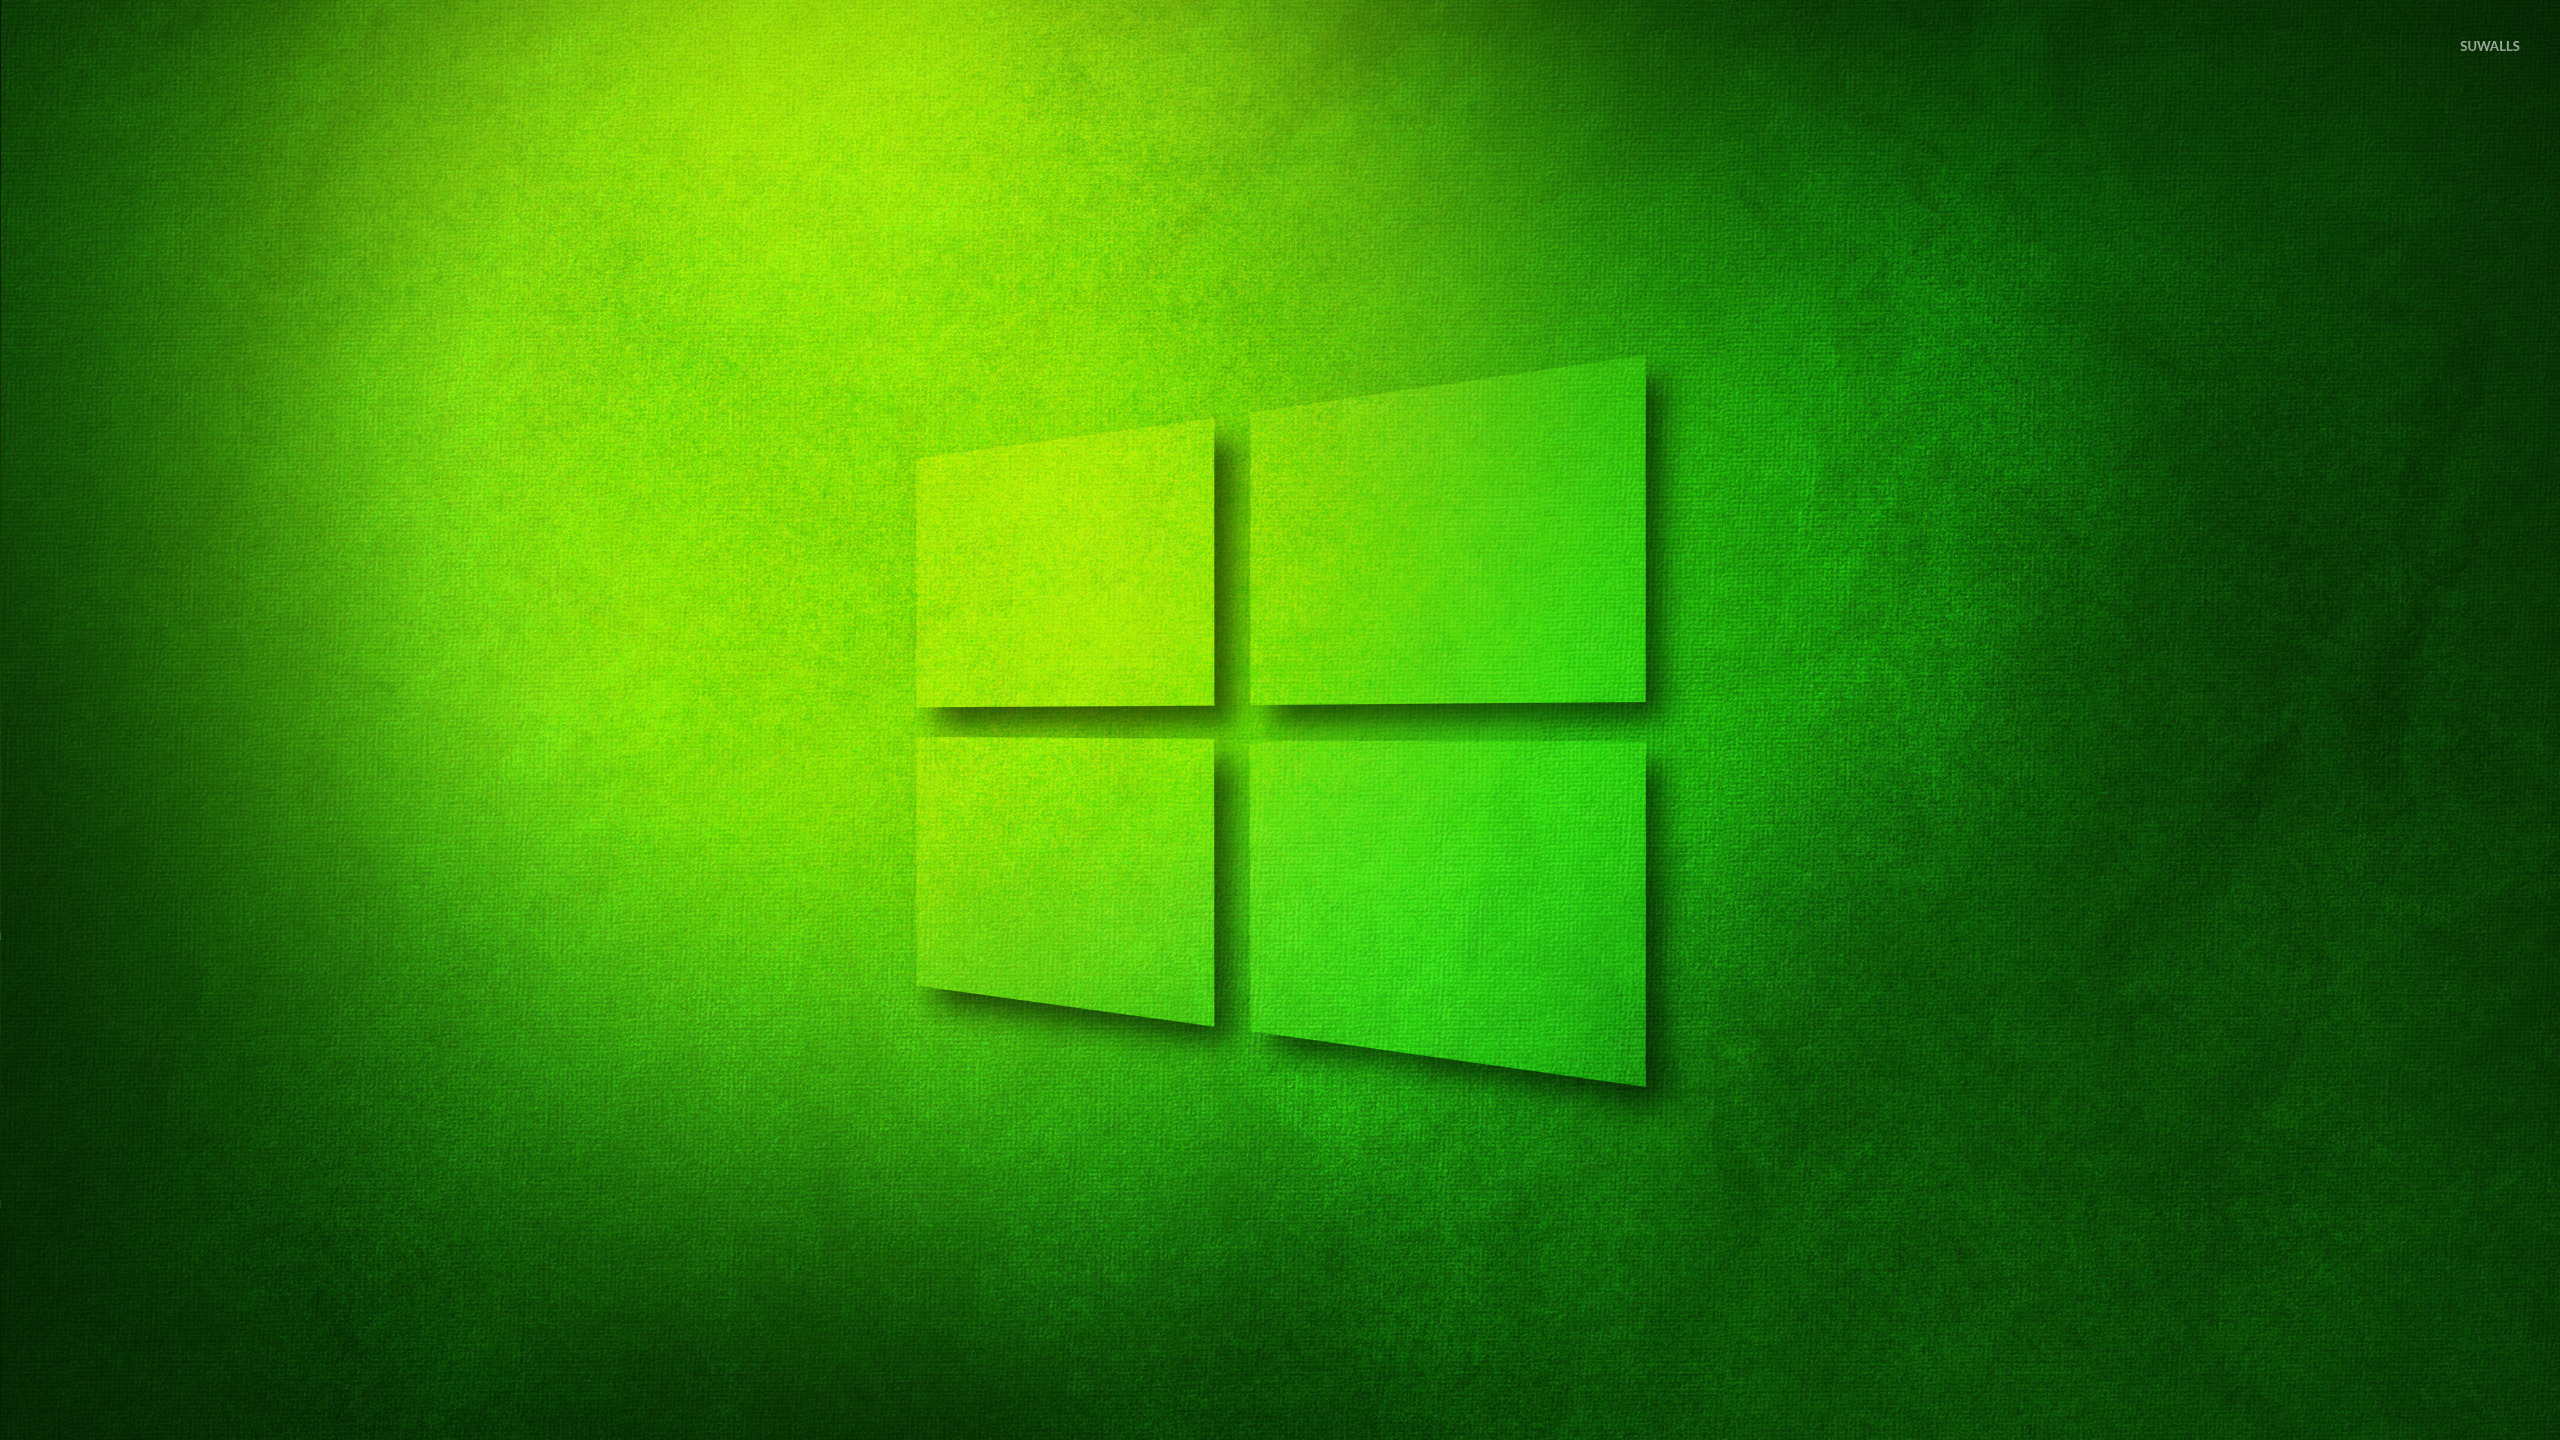 Windows 10 transparent logo on green paper wallpaper - Computer ...